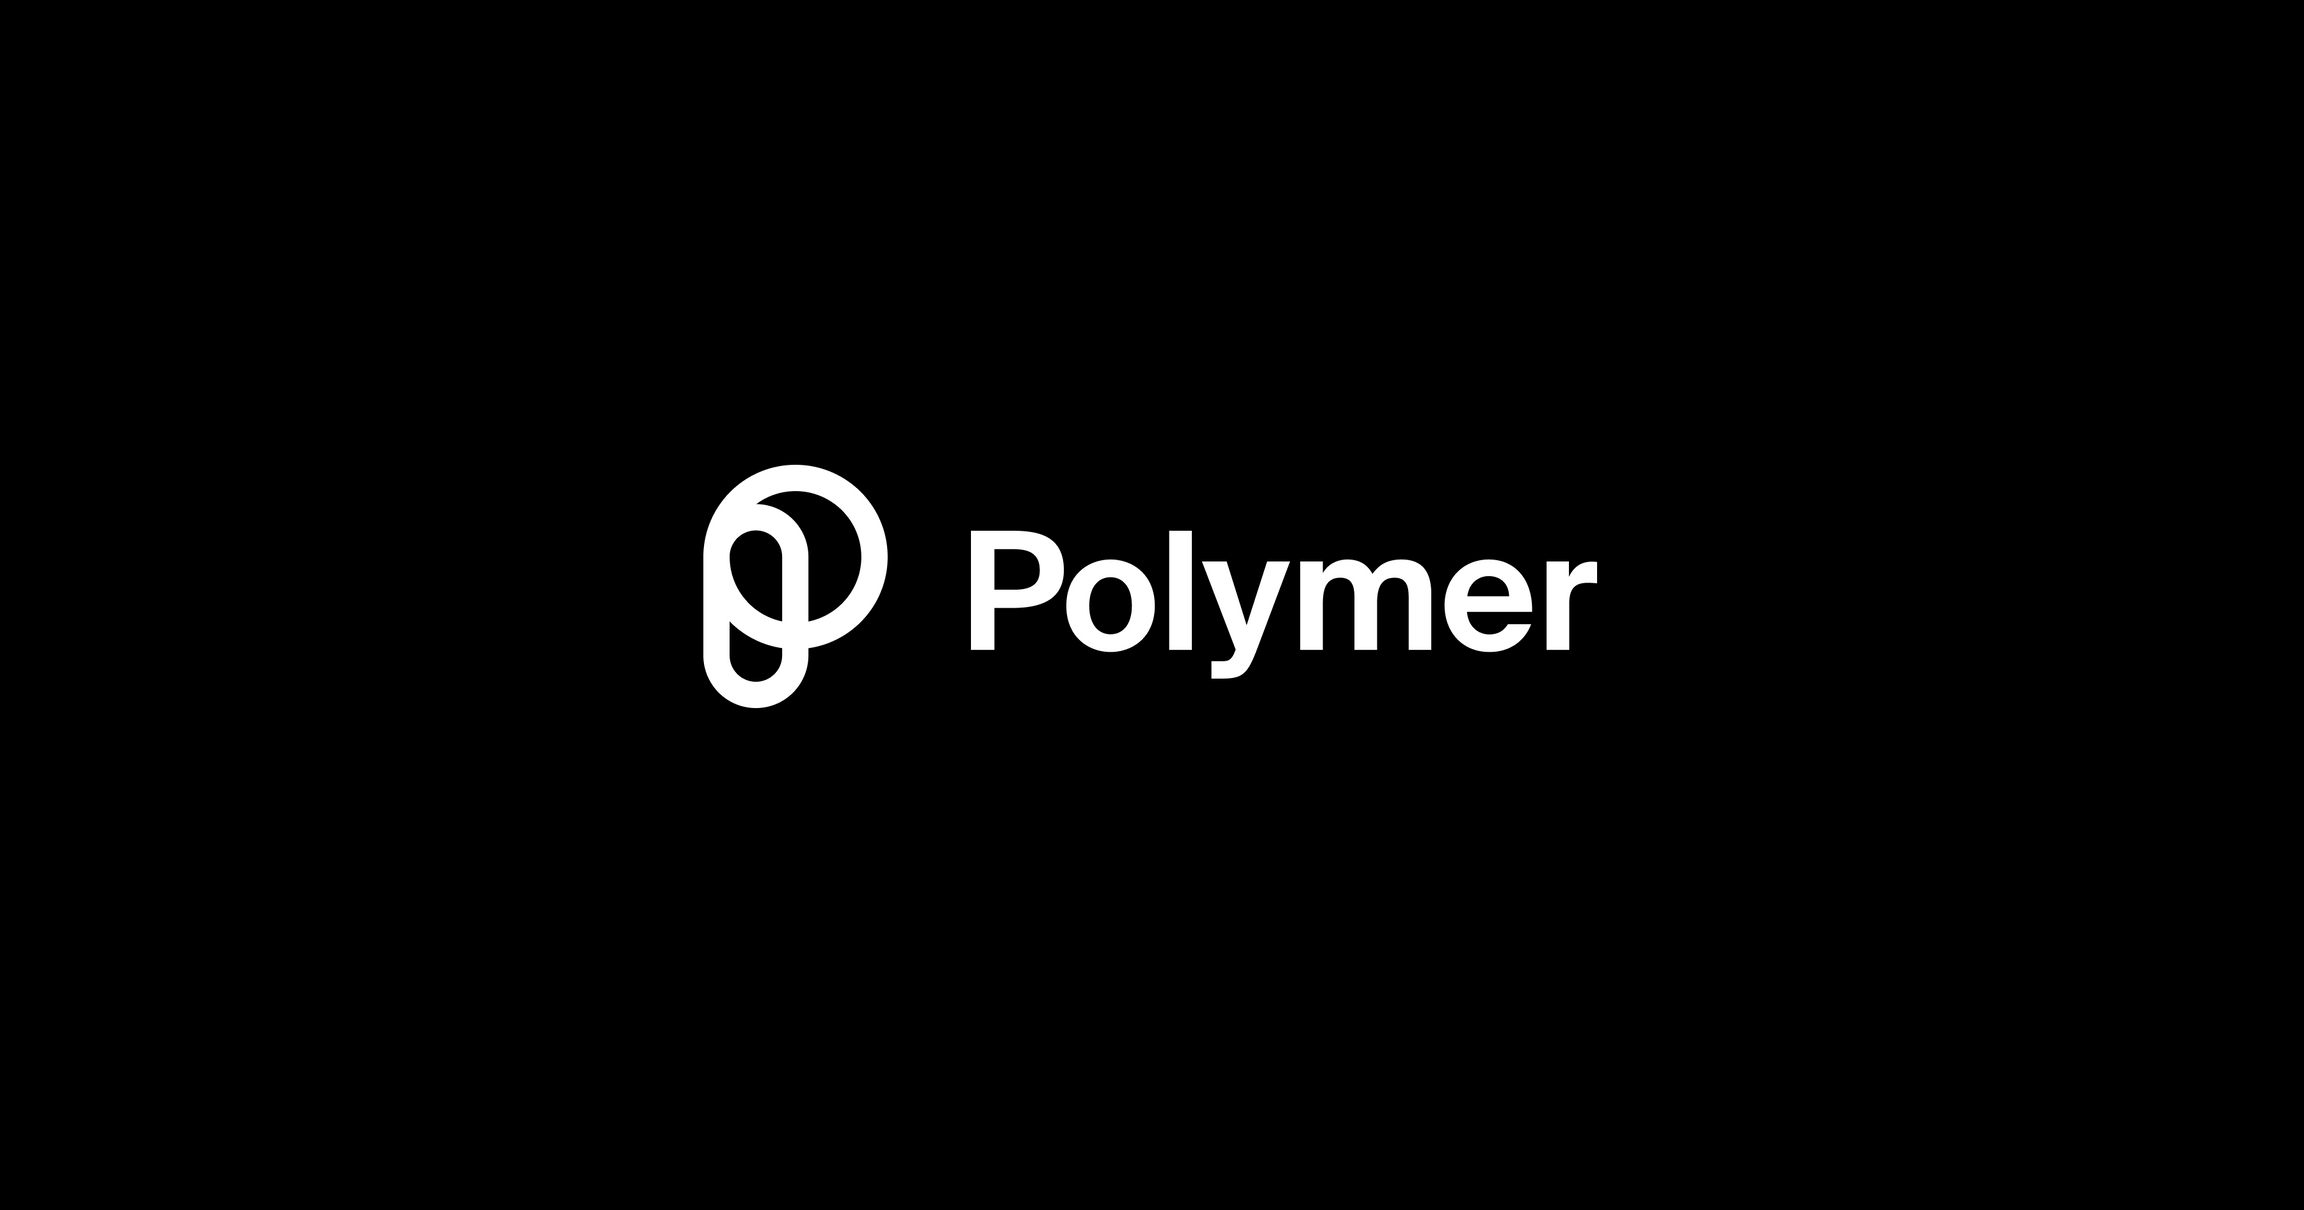 The Polymer logo